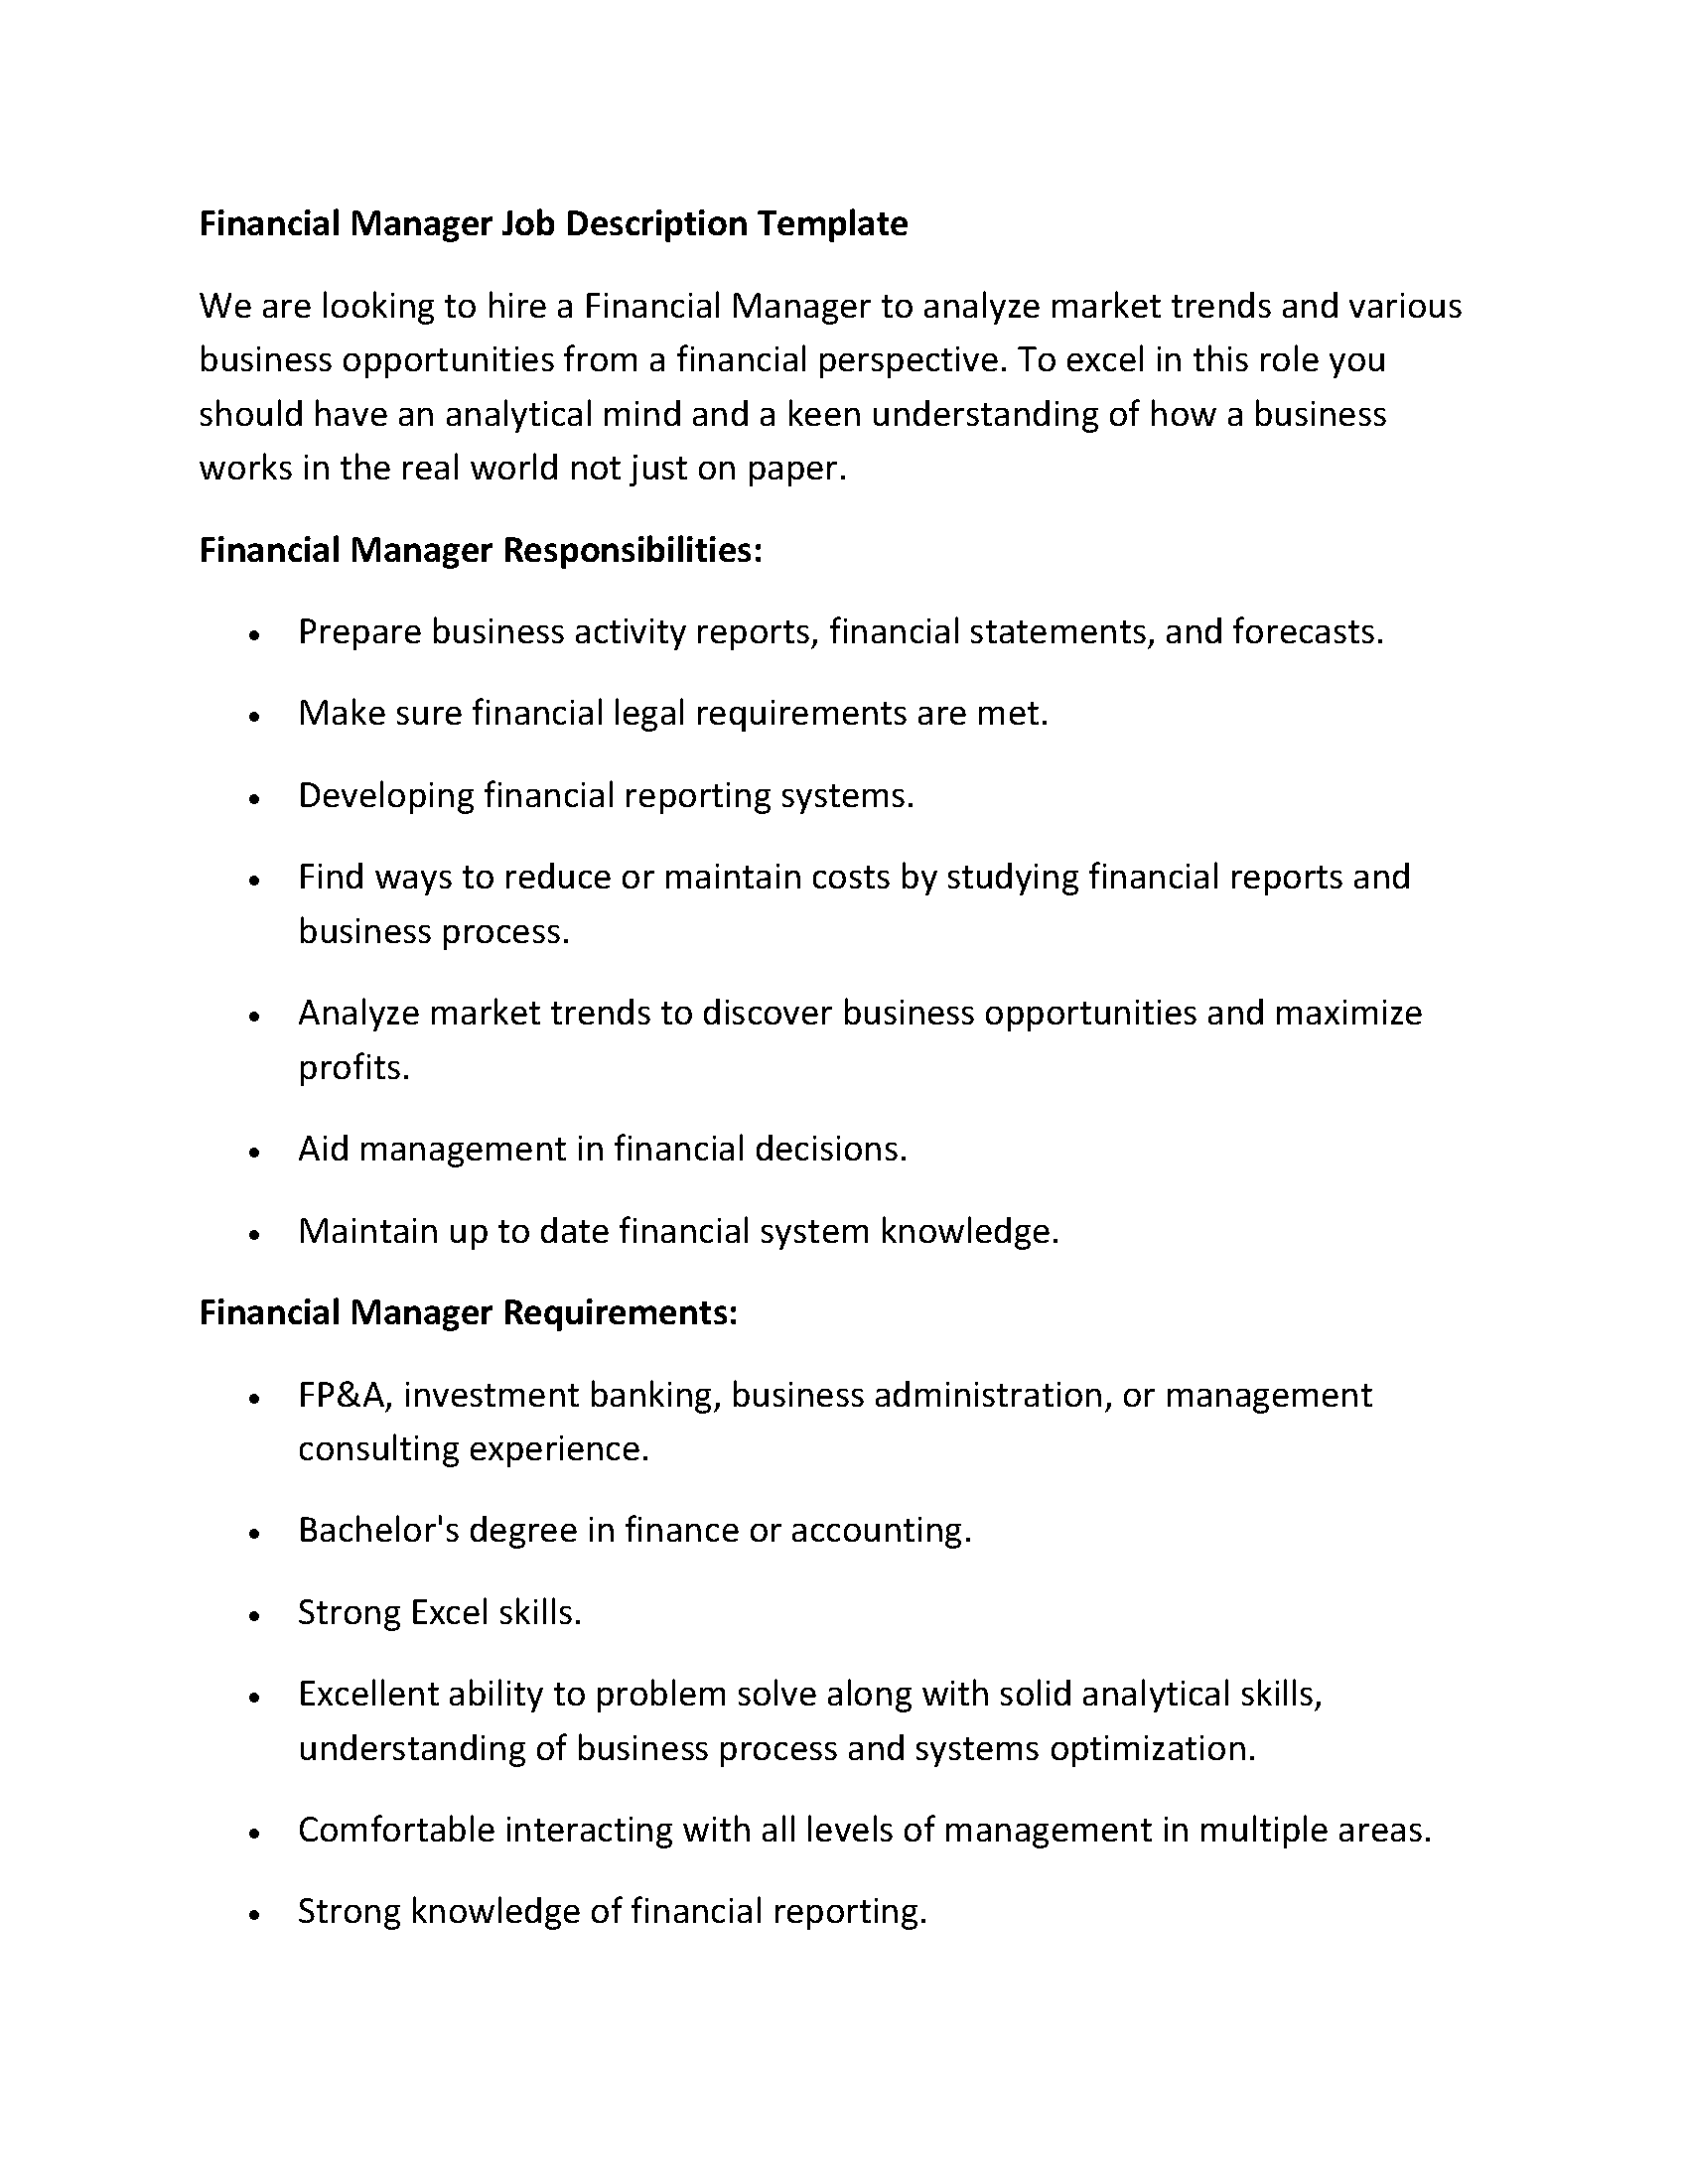 Financial Manager Job Description Template